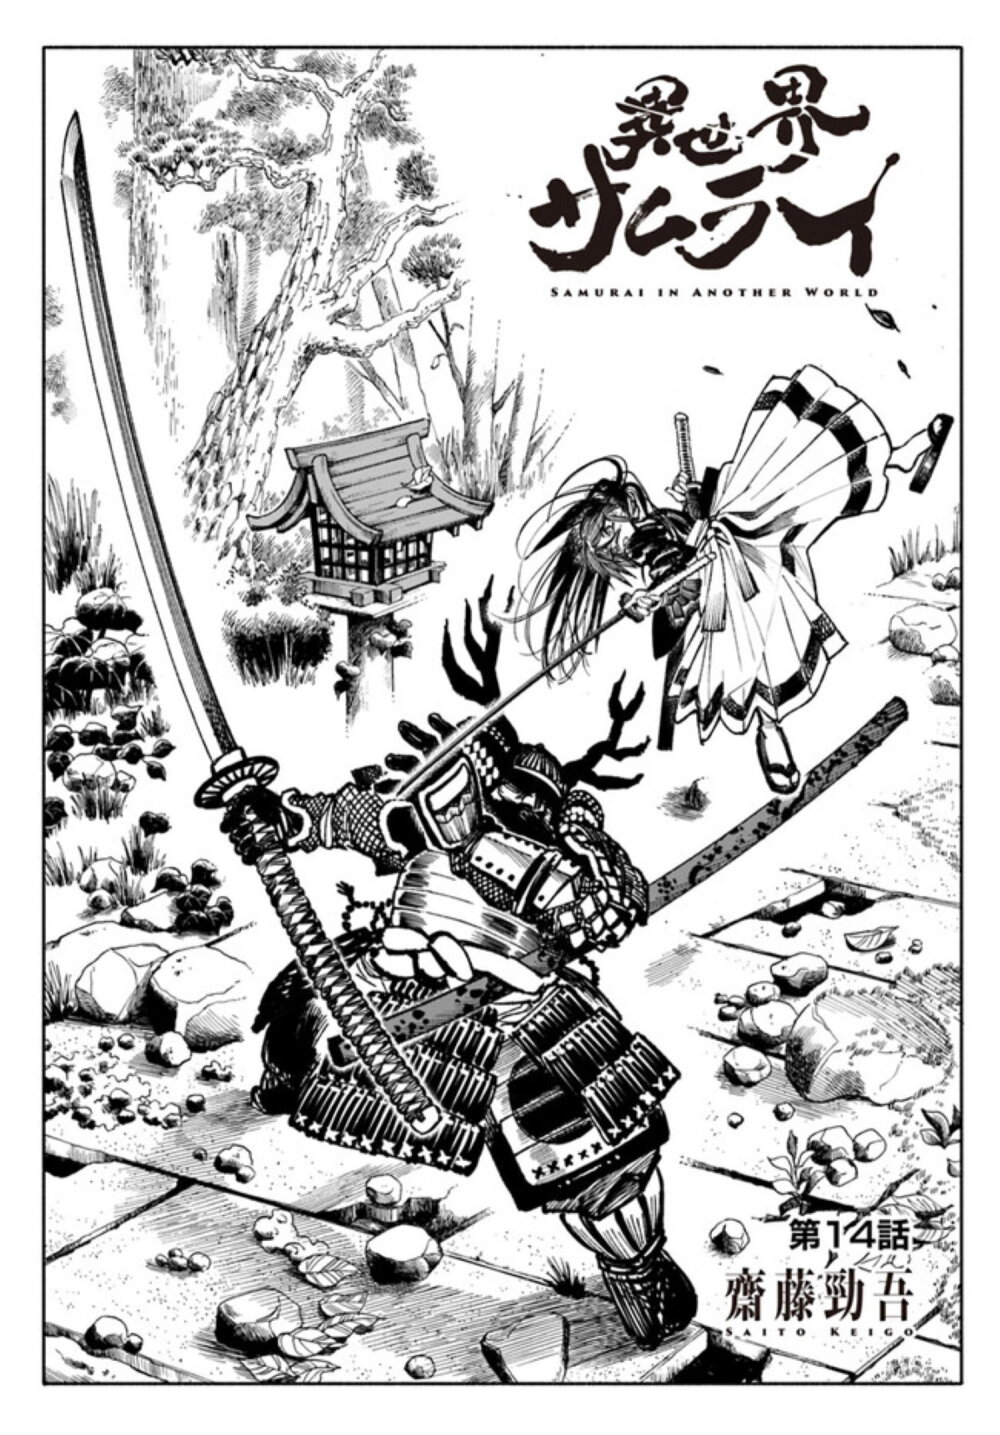 Samurai in Another World 14 01